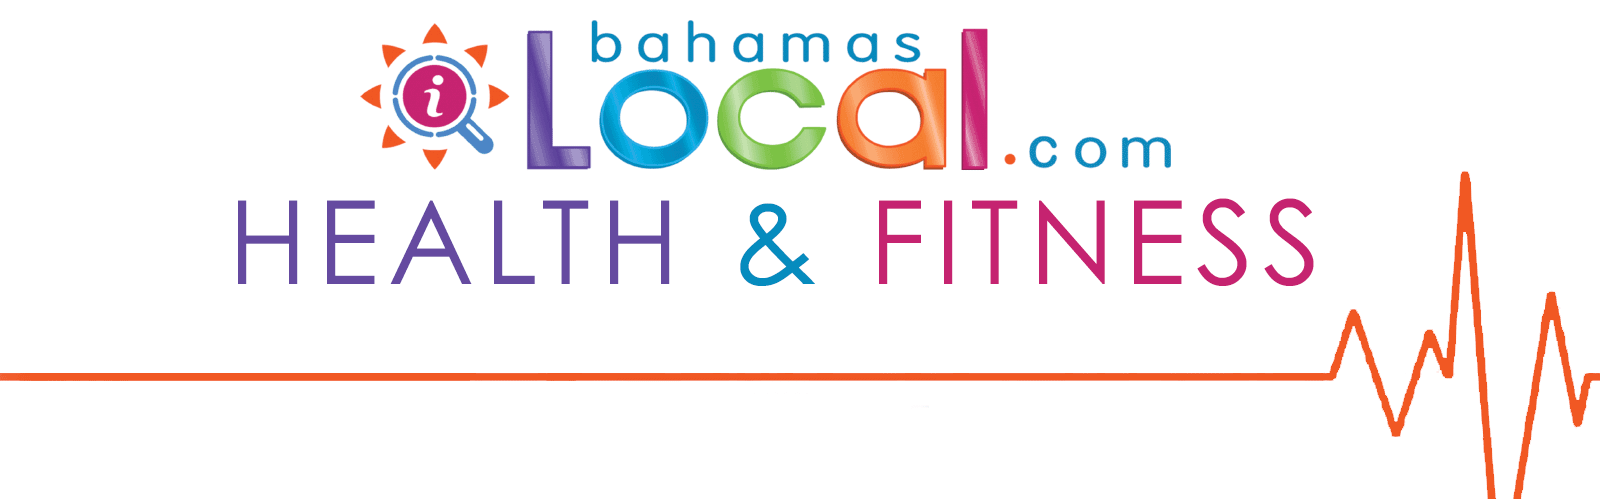 BahamasLocal.com Health & Fitness